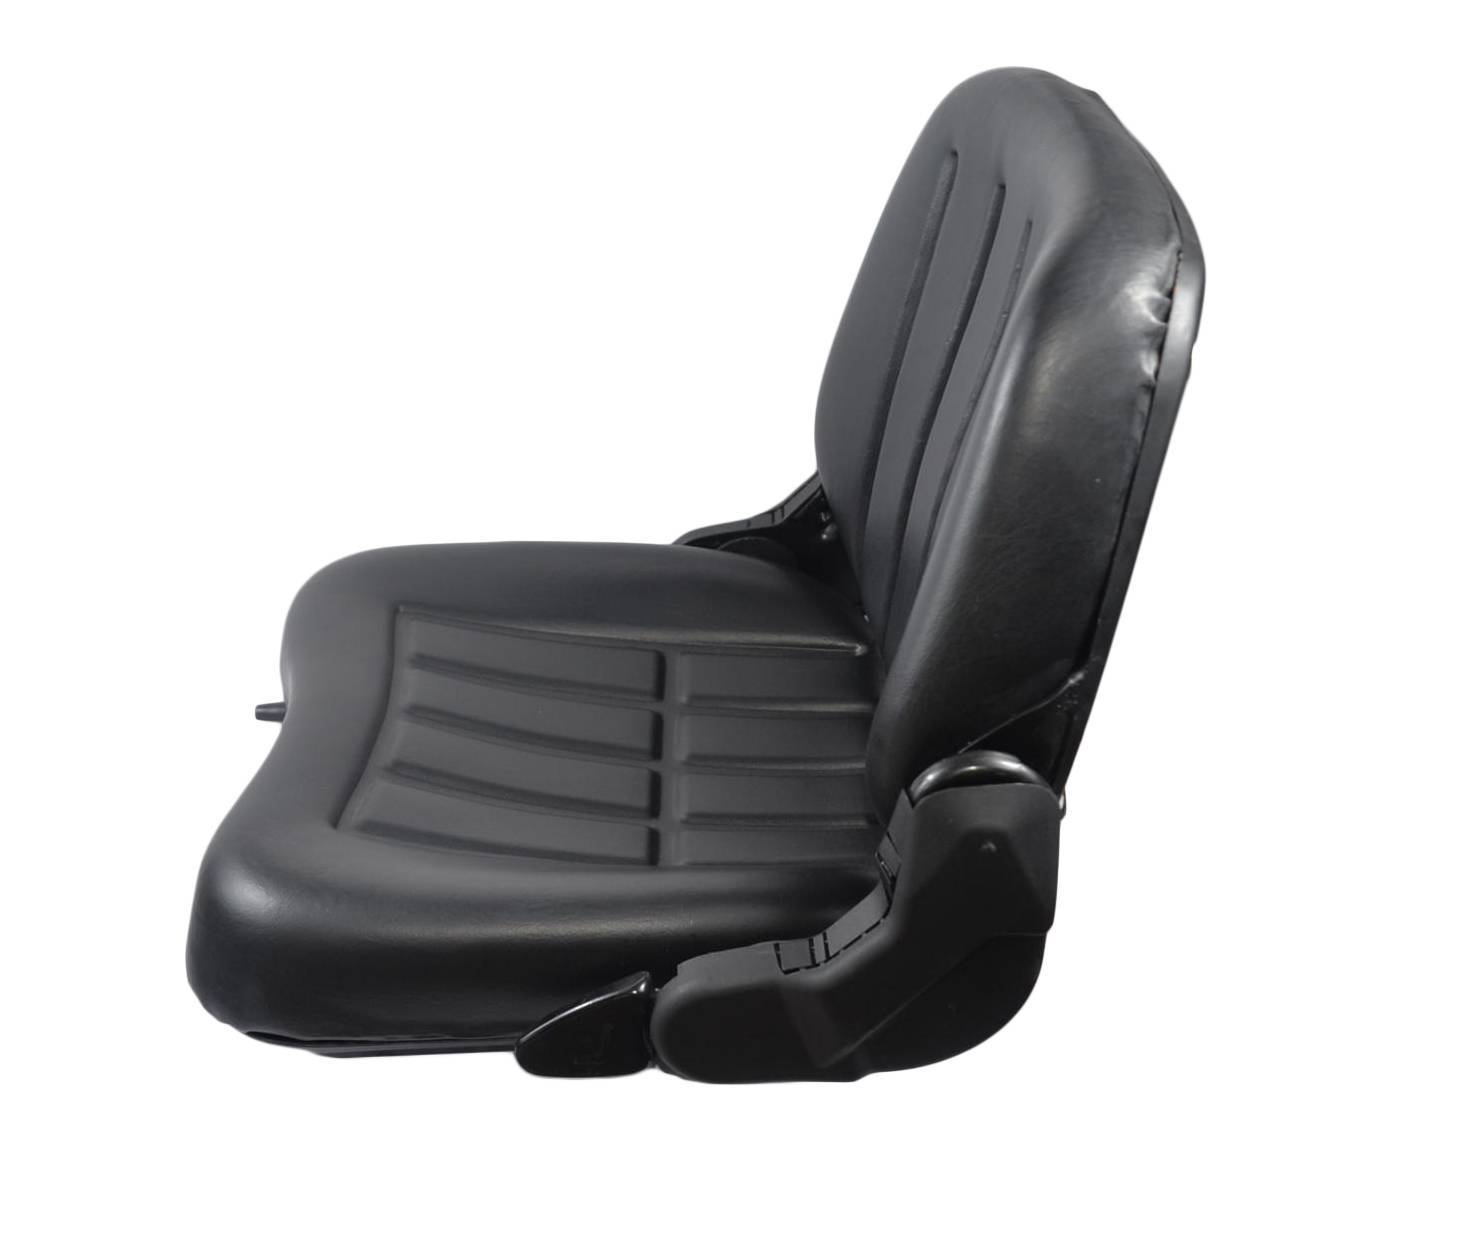 YY41 Foldable seat